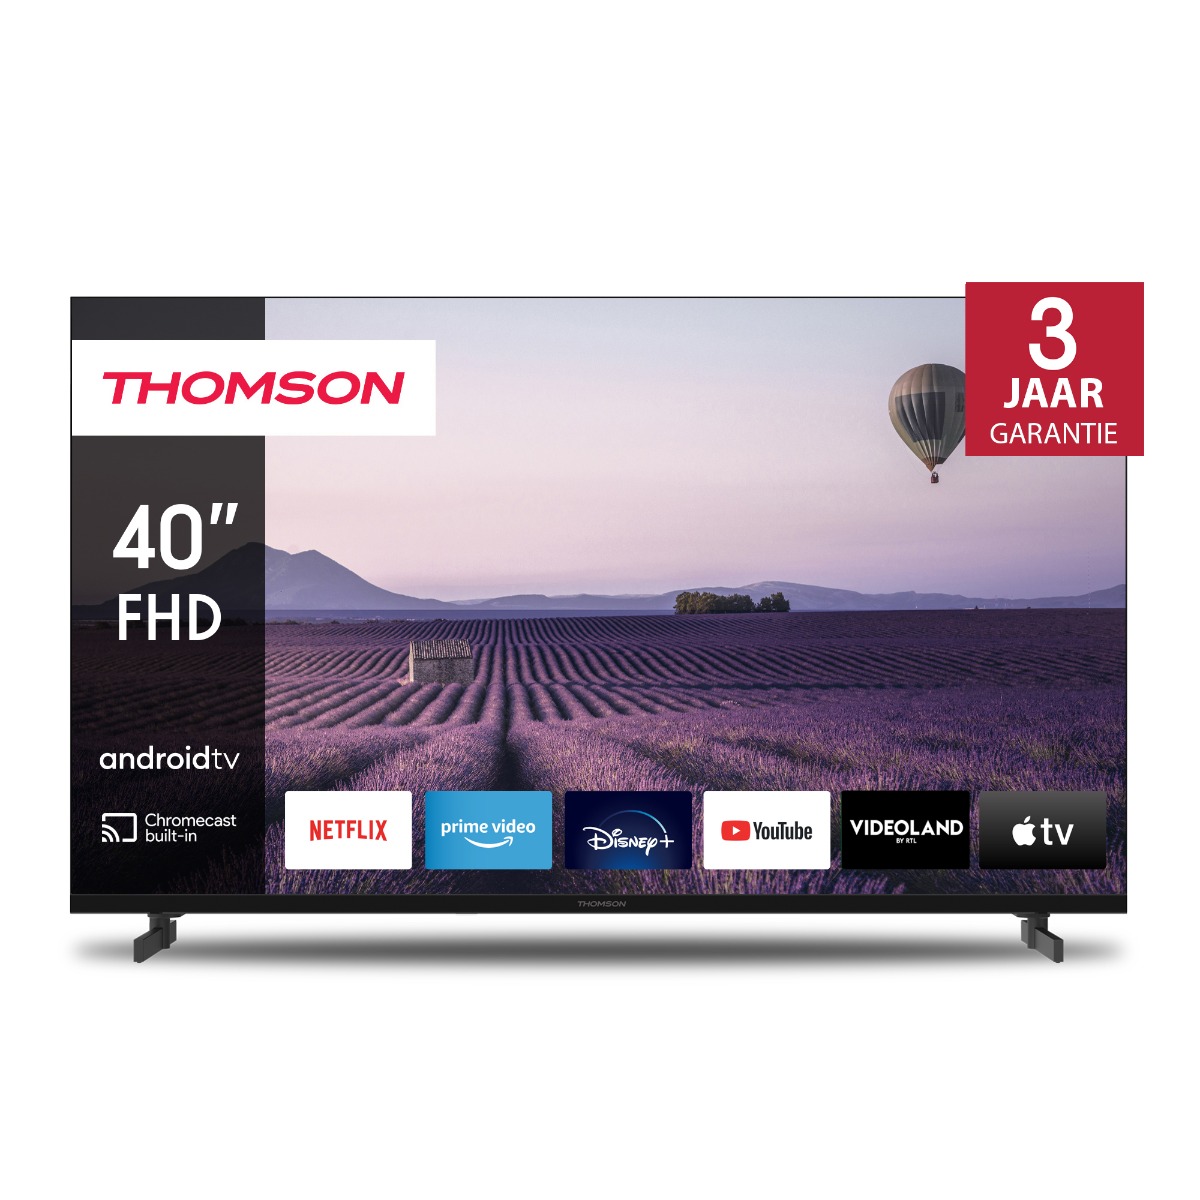 Thomson - 43FA2S13 - FULL HD - Android TV - 3 JR Garantie